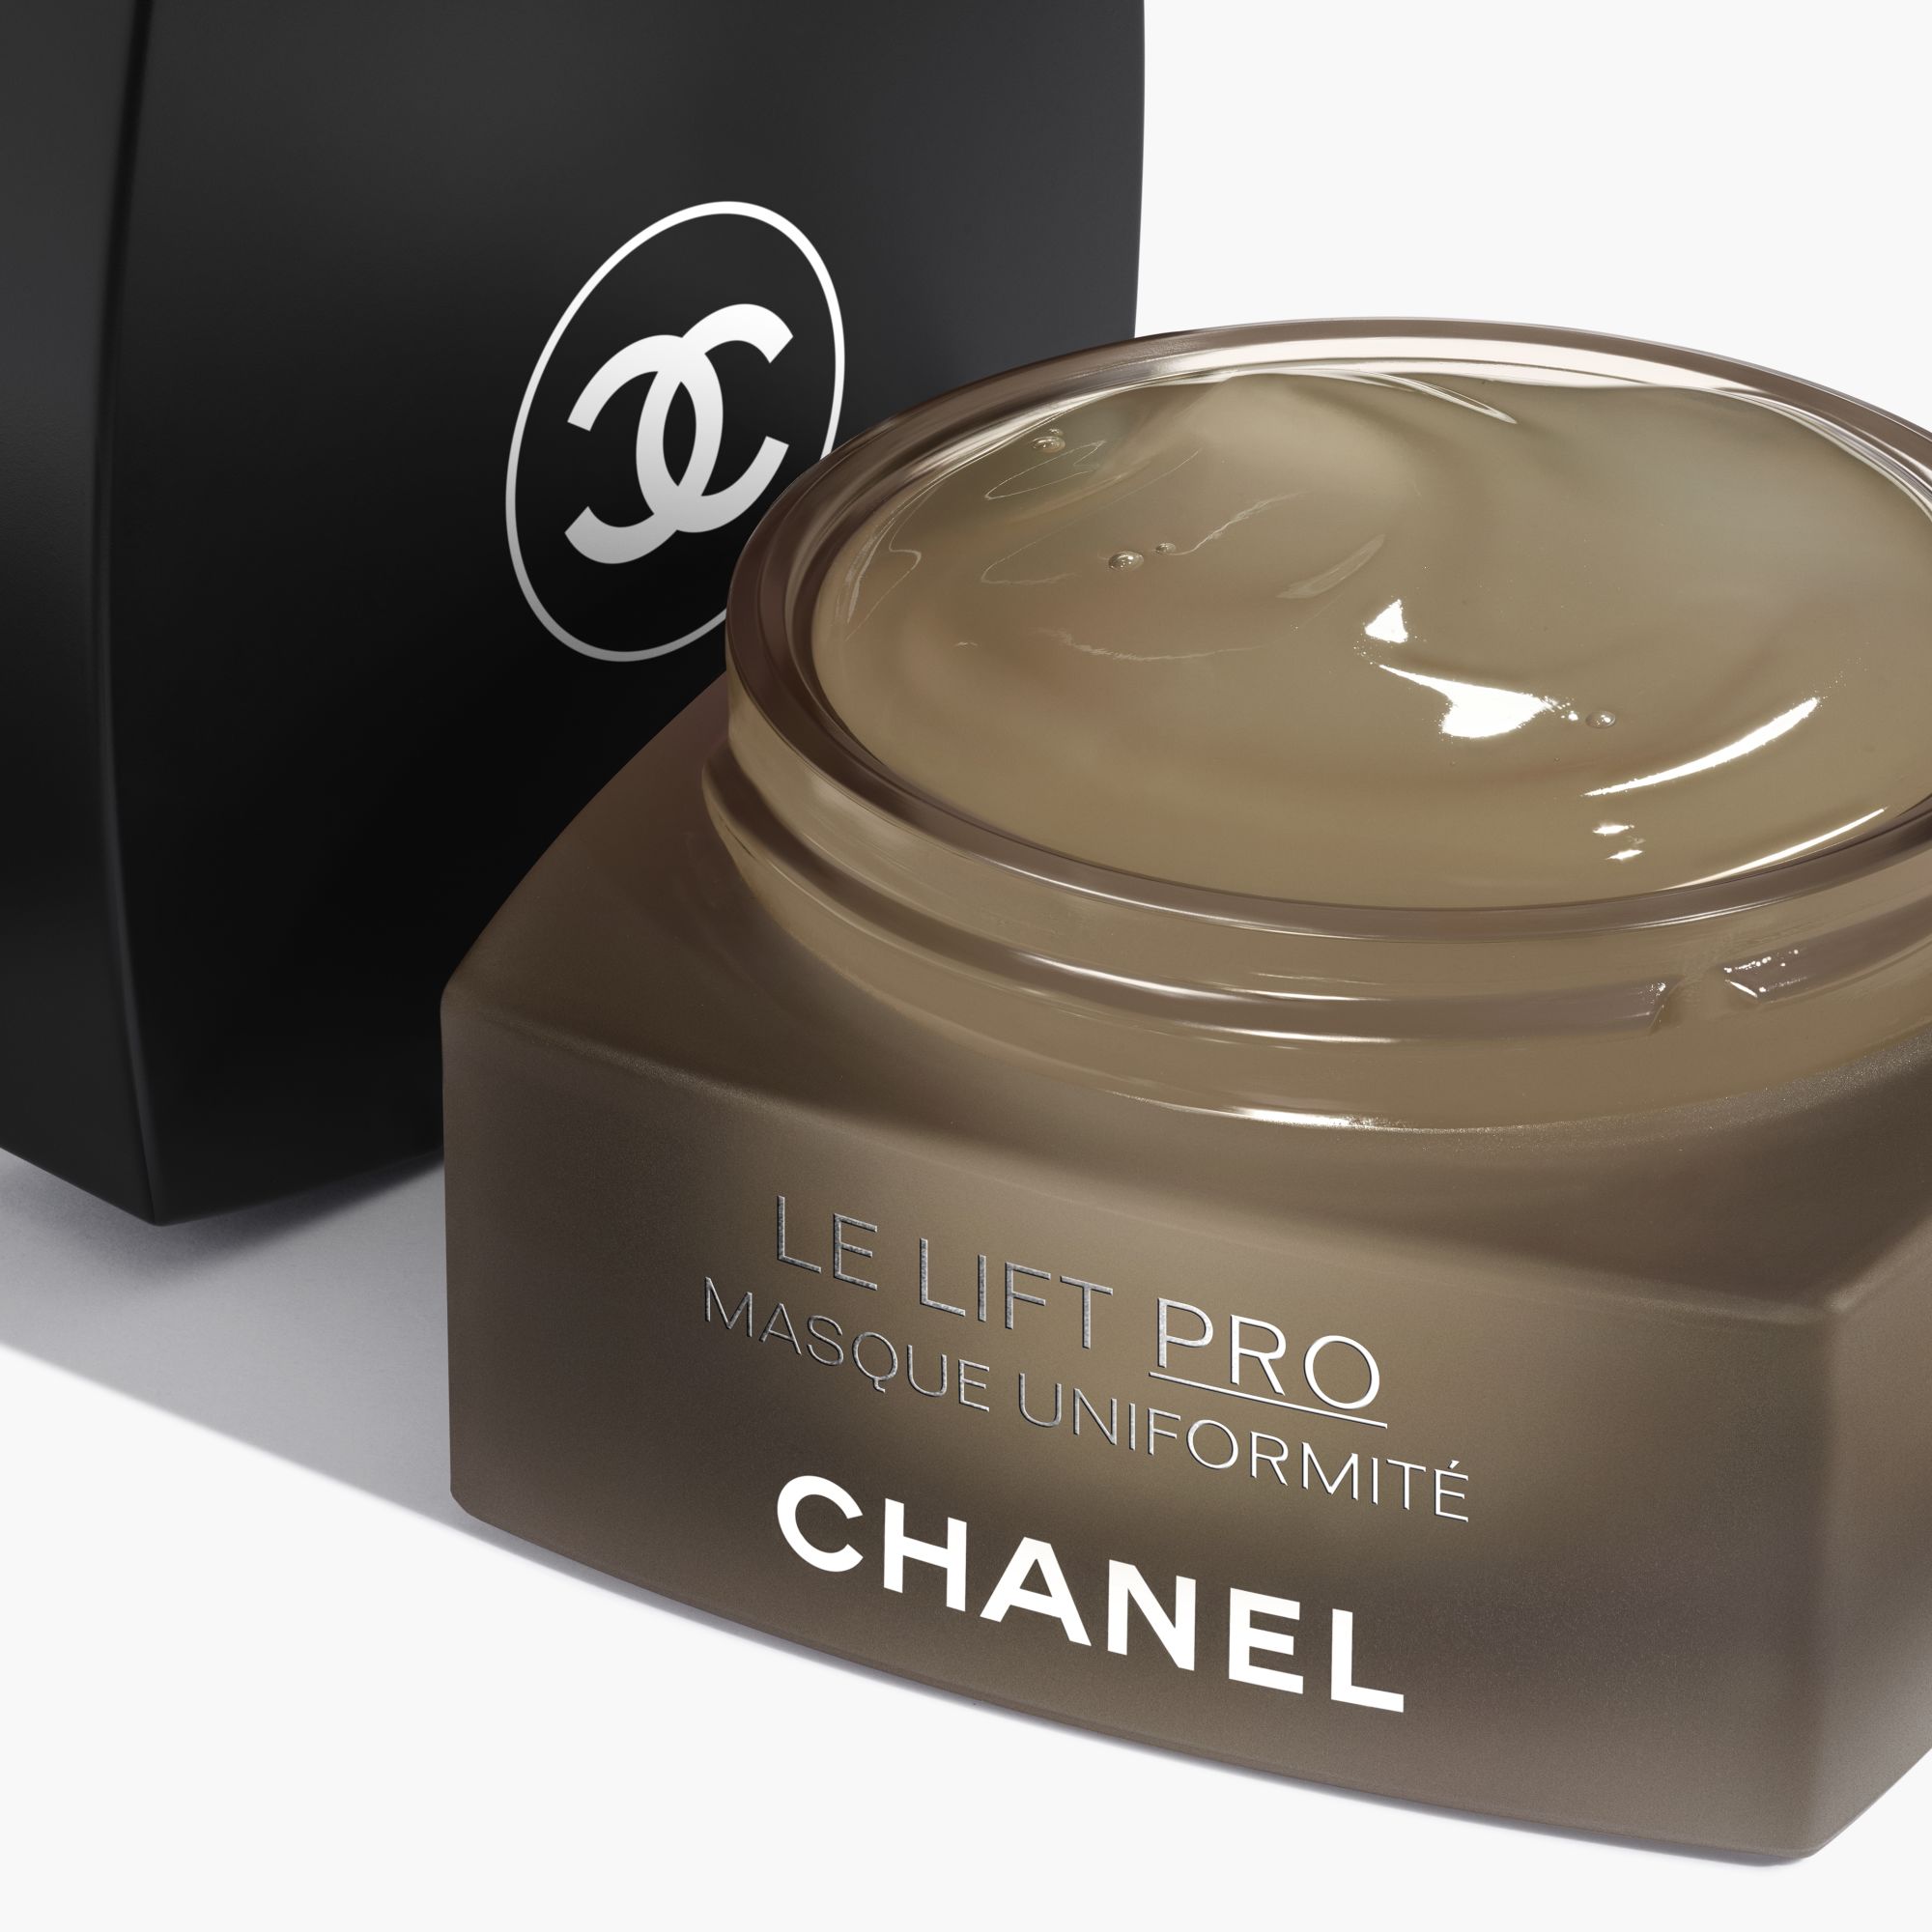 CHANEL Le Lift Pro Skincare Review 